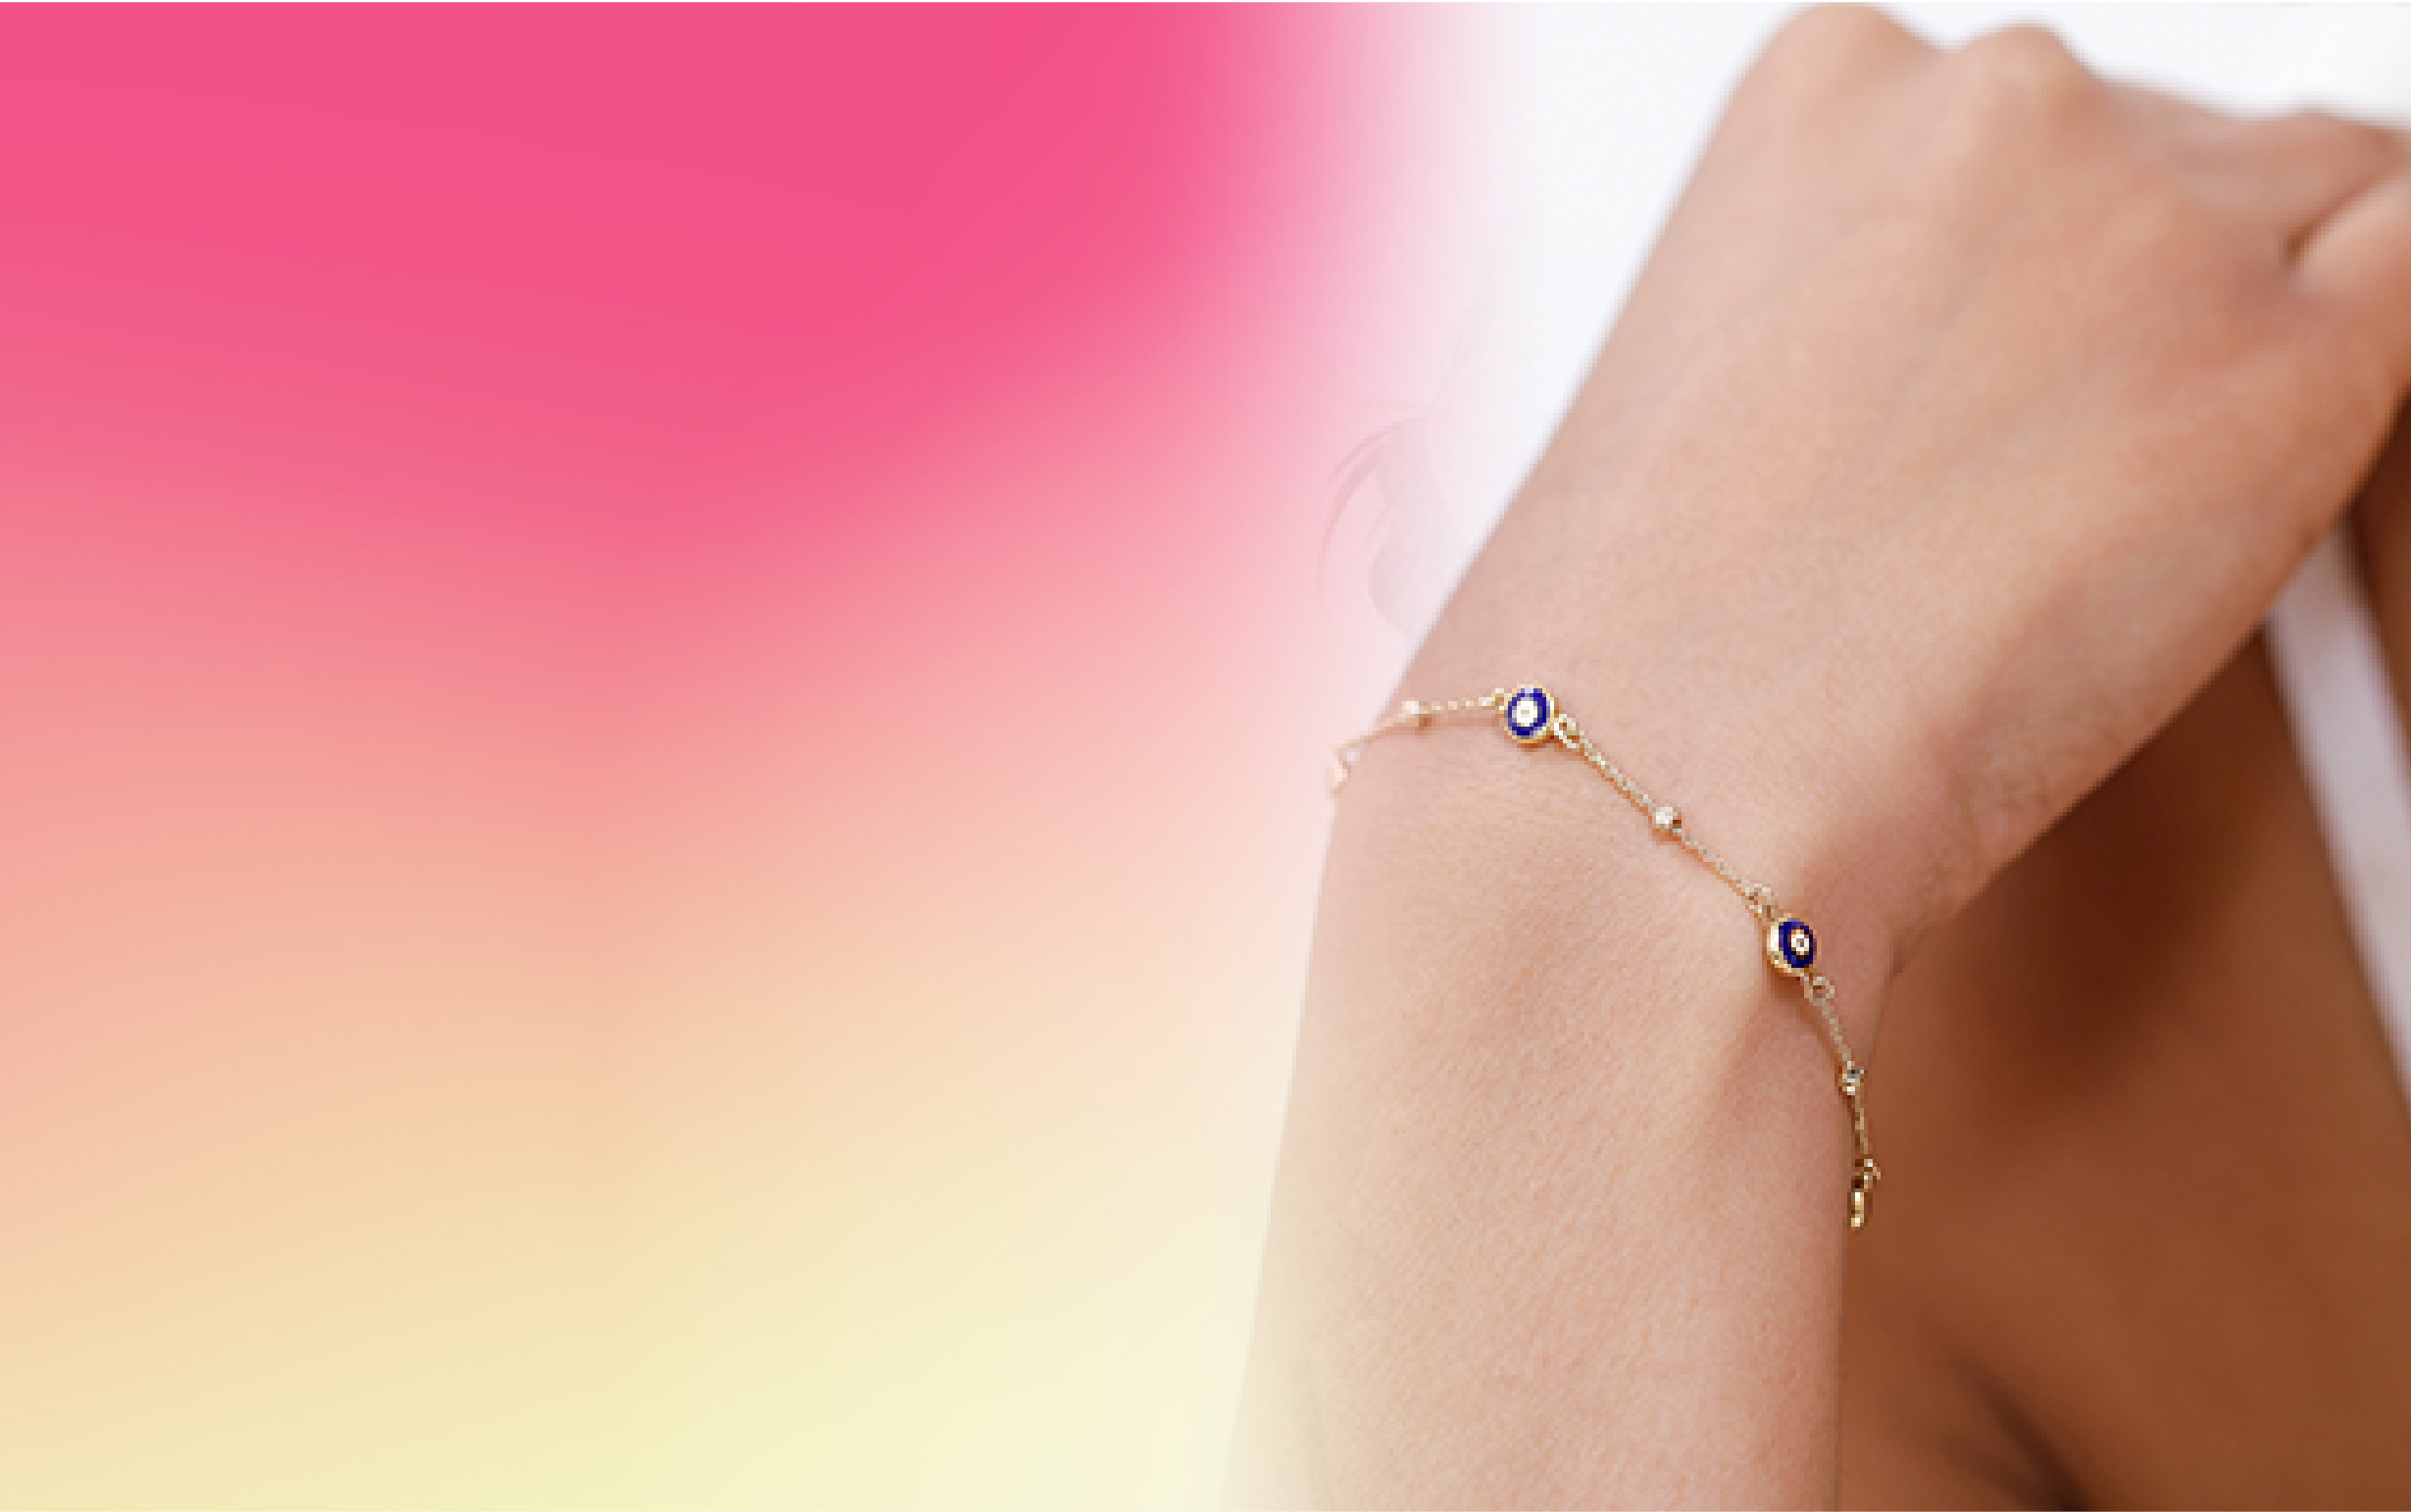 Cartier love bracelet and nail bracelet wear together | Tiffany and co  bracelet, Gold bangles for women, Cartier love bracelet